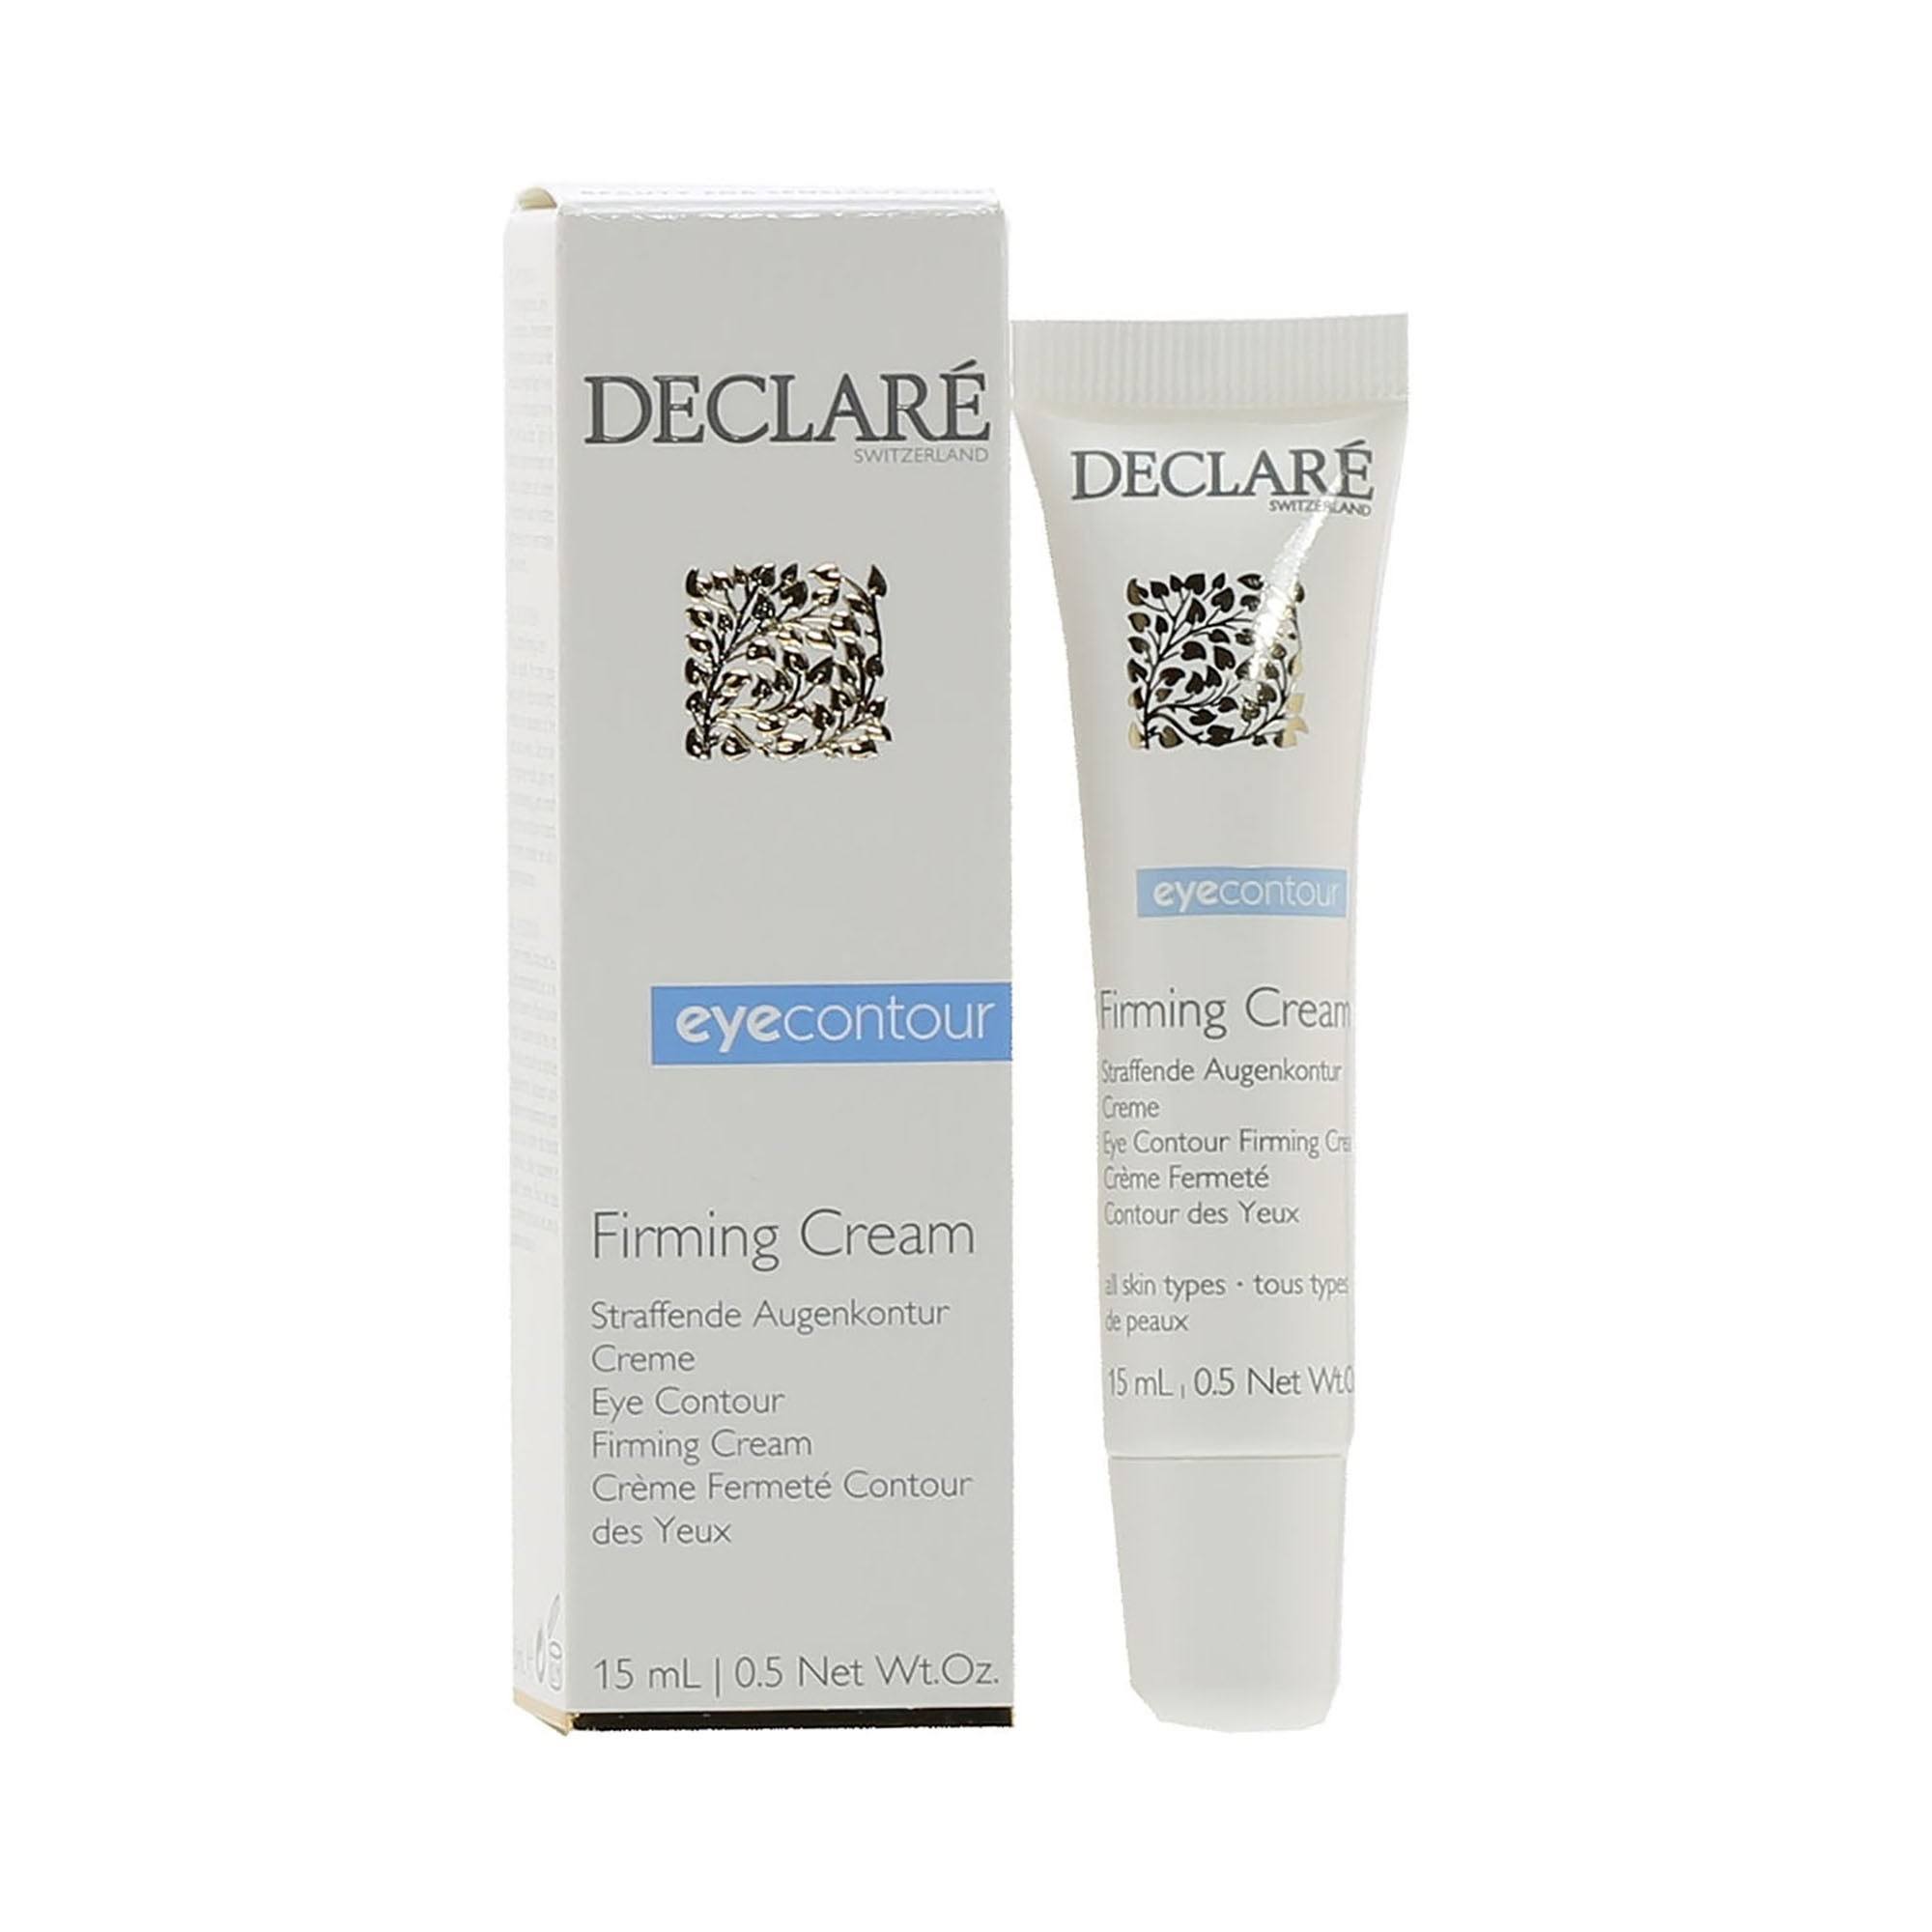 Declare Eye Contour Firming Cream - 15ml